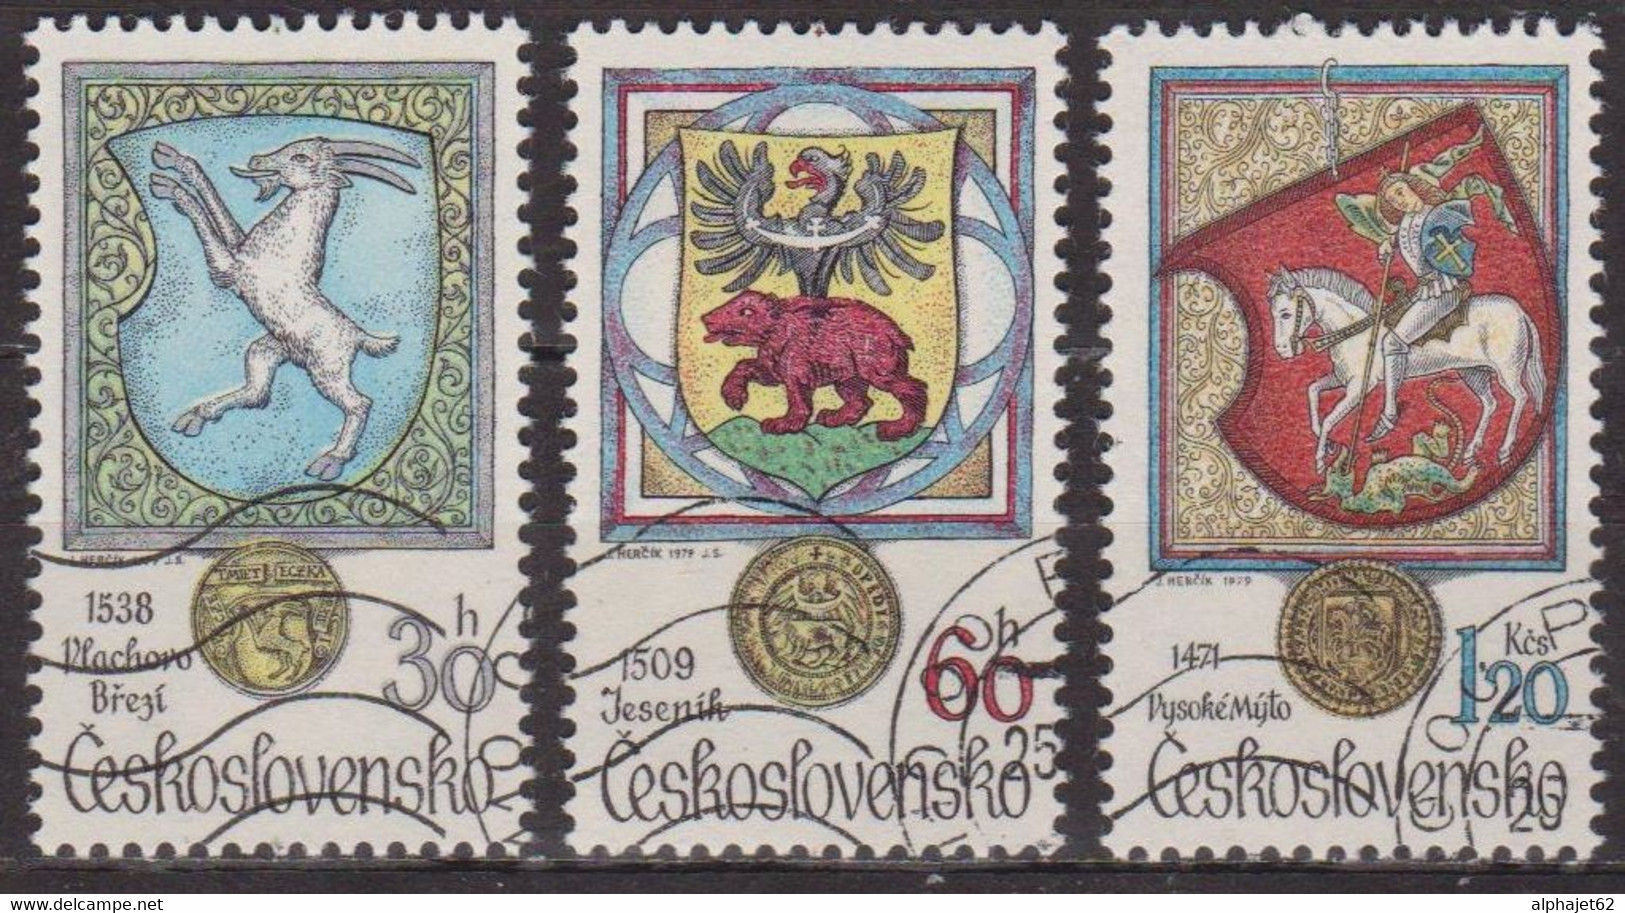 Armoiries - TCHECOSLOVAQUIE - Vlachovo Brezi, Jesenik, Vysoké Mito - Bouc, Ours Brun, Cheval Blanc - N° 2335 à 2337 1979 - Used Stamps